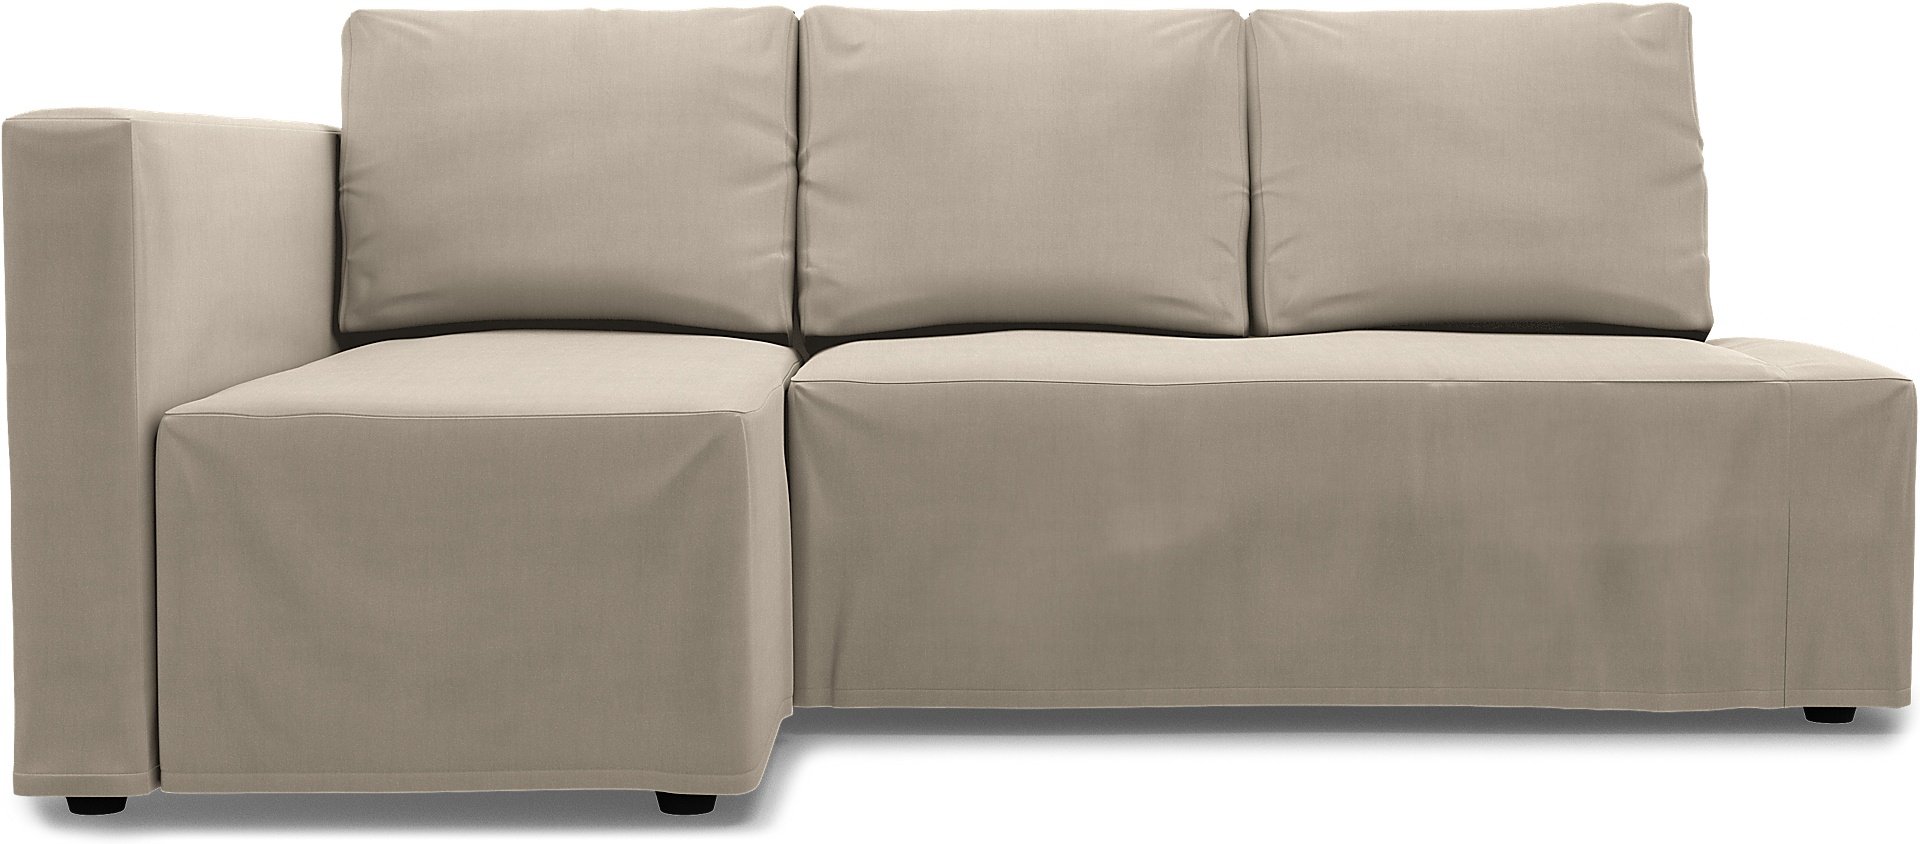 IKEA - Friheten Sofa Bed with Left Chaise Cover, Parchment, Linen - Bemz